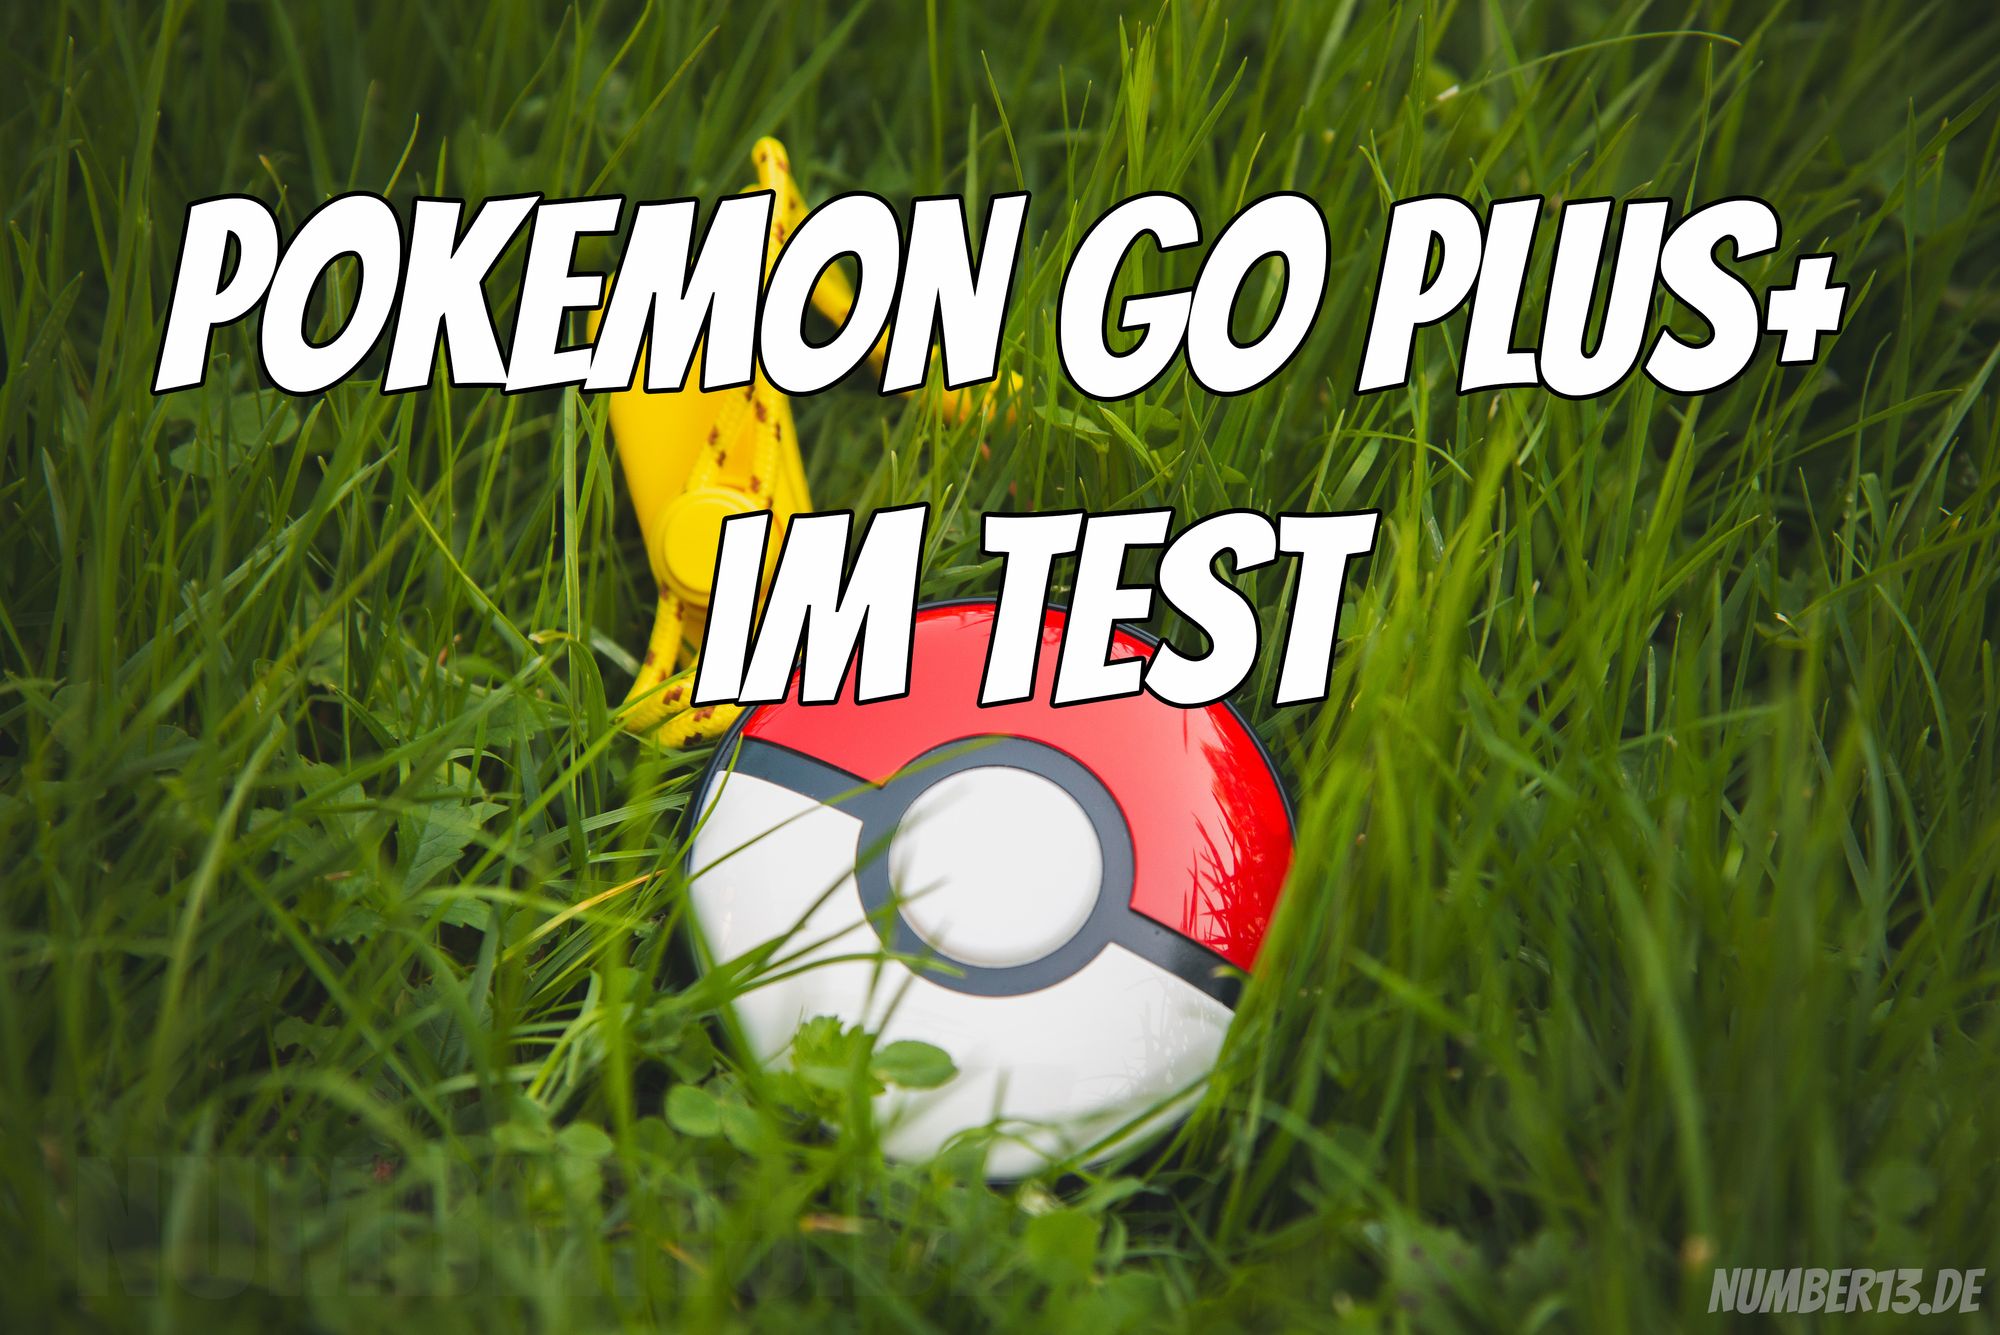 Pokémon Go: Testing the Pokémon GO Plus+